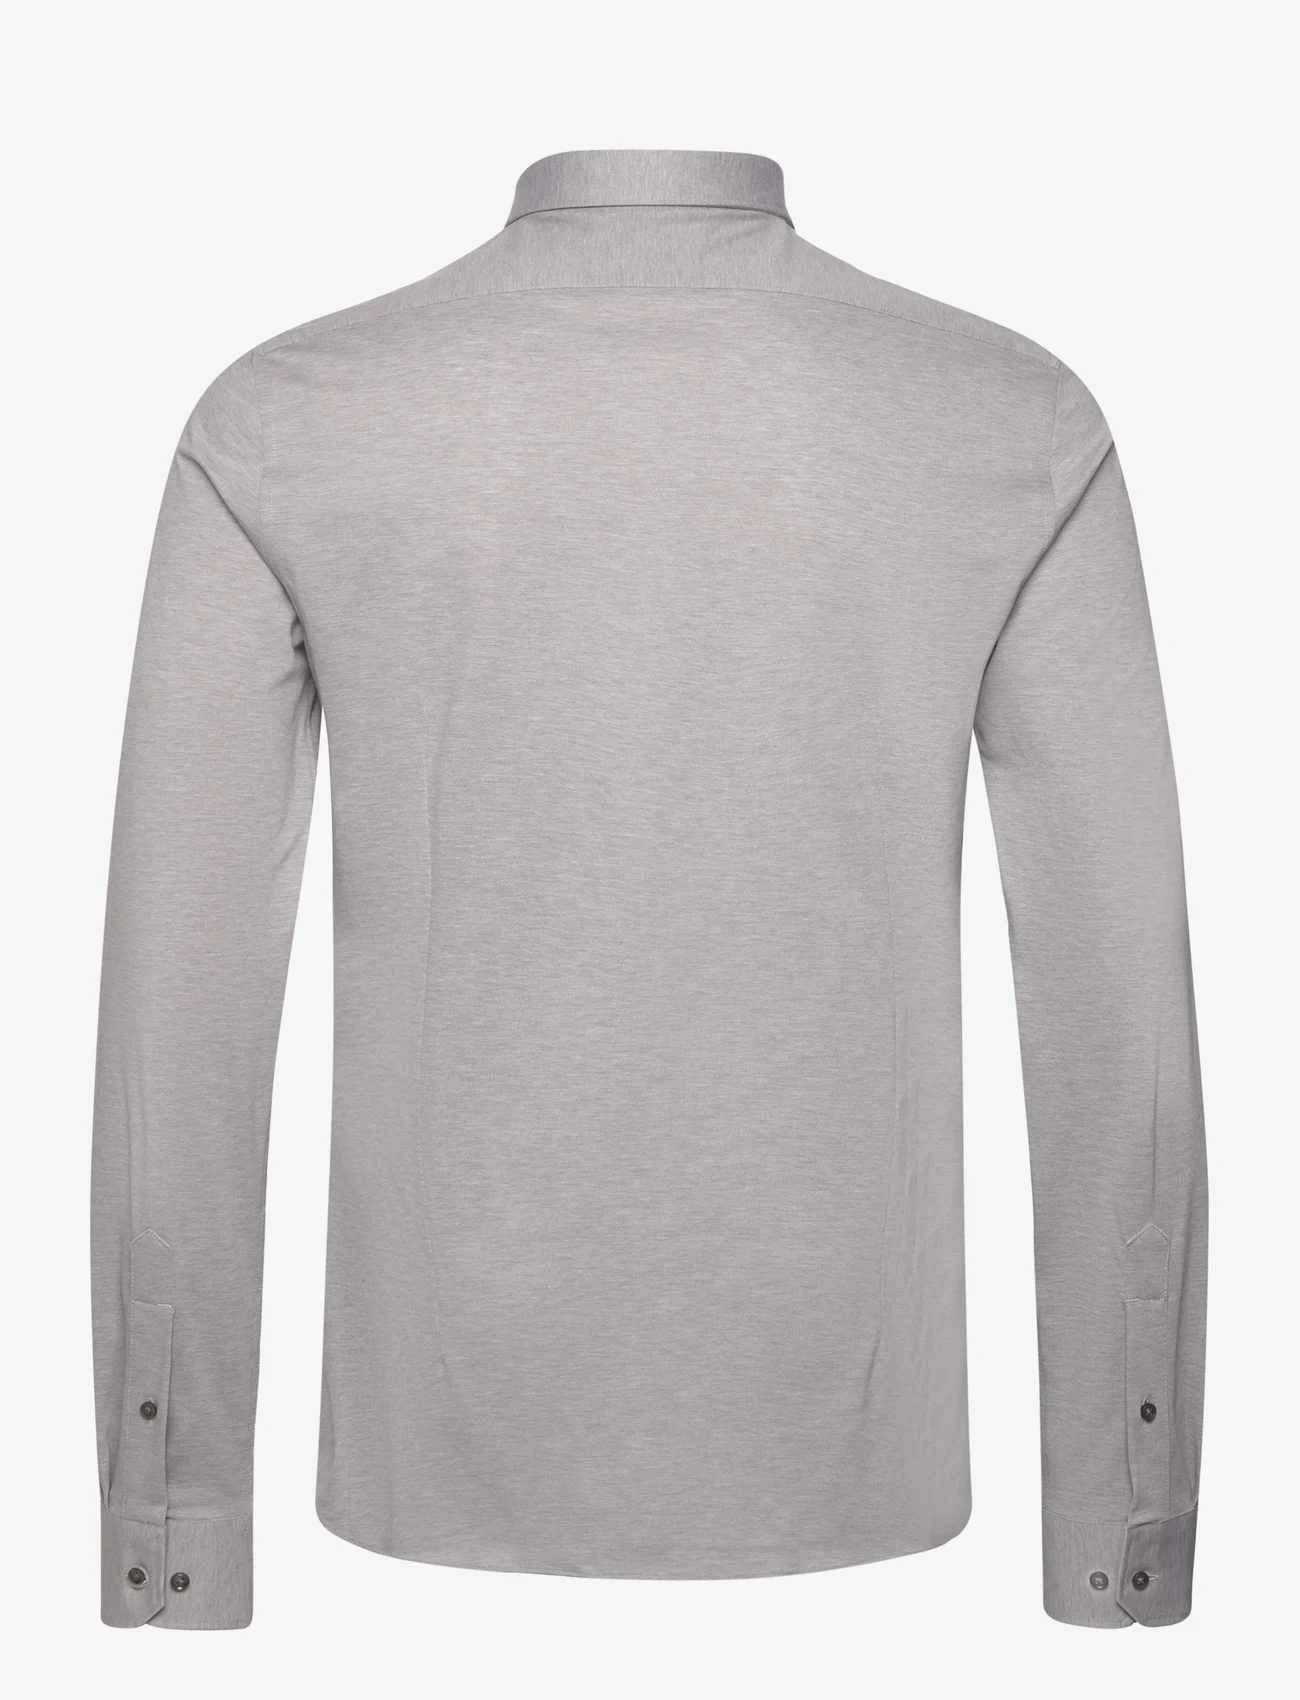 Michael Kors - SOLID PIQUE SLIM SHIRT - basic shirts - light grey - 1